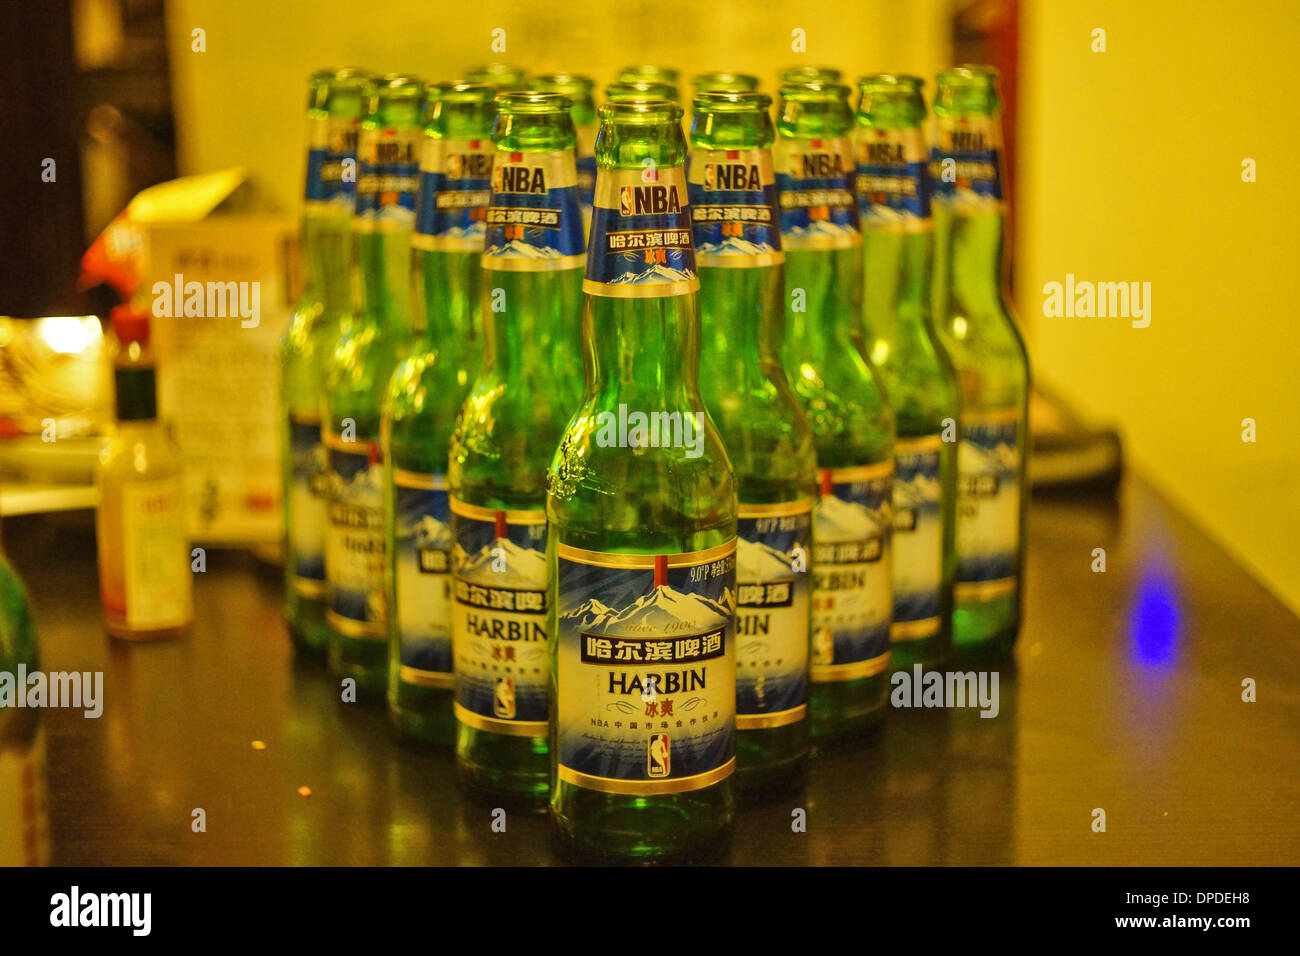 Empty bottles of Harbin beer, China Stock Photo